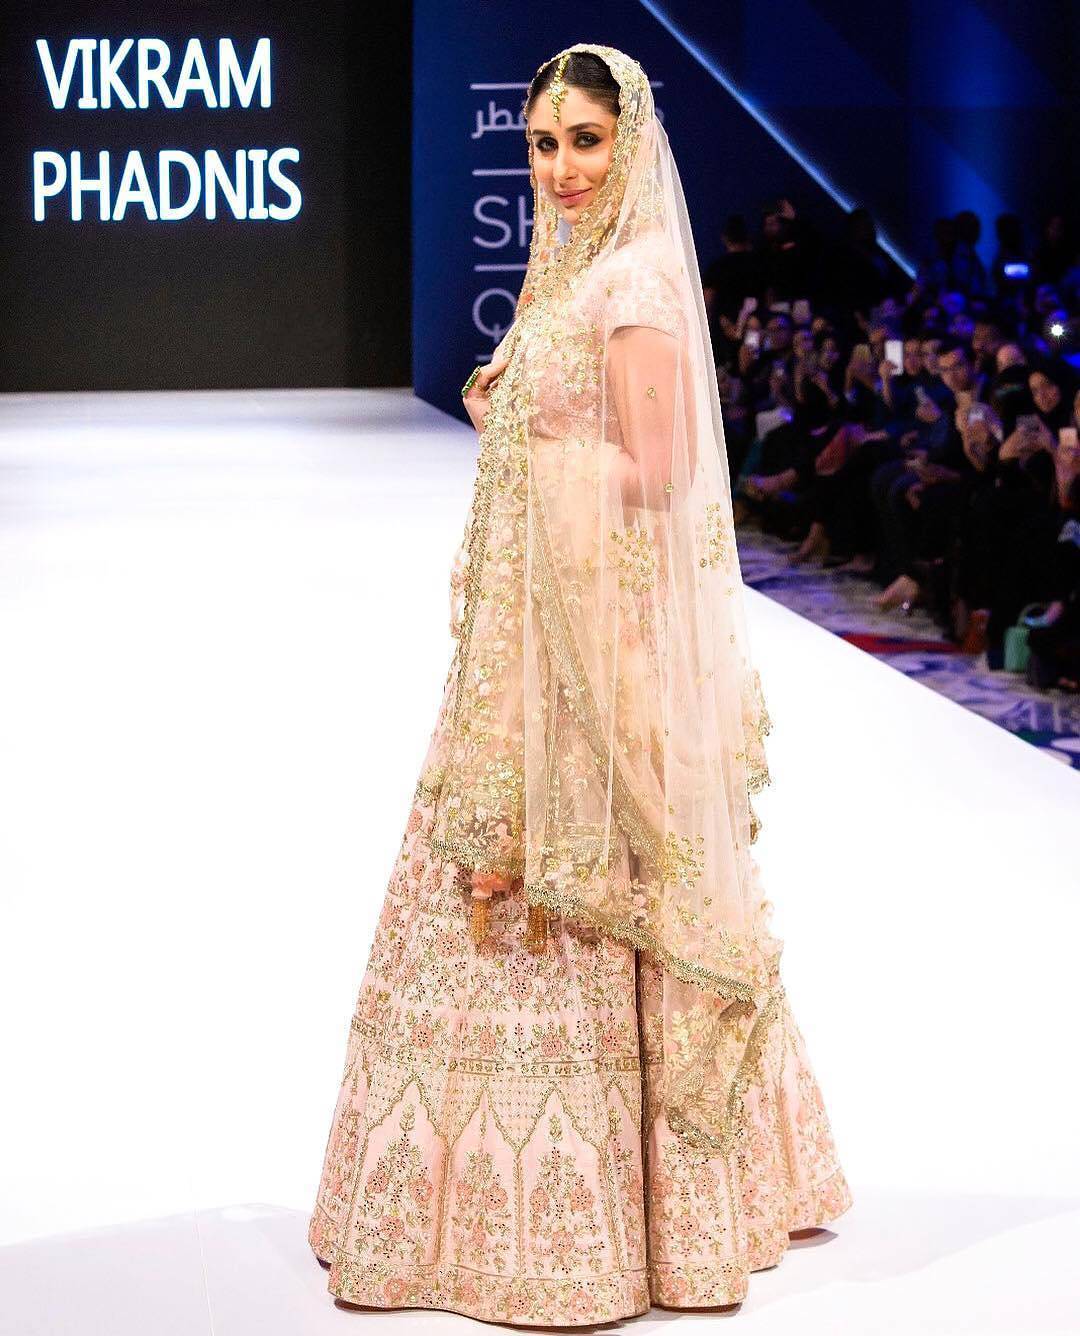 Kareena Kapoor Looked Beautiful & Fashionable In Vikram Phadnis’s Bridal Outfit